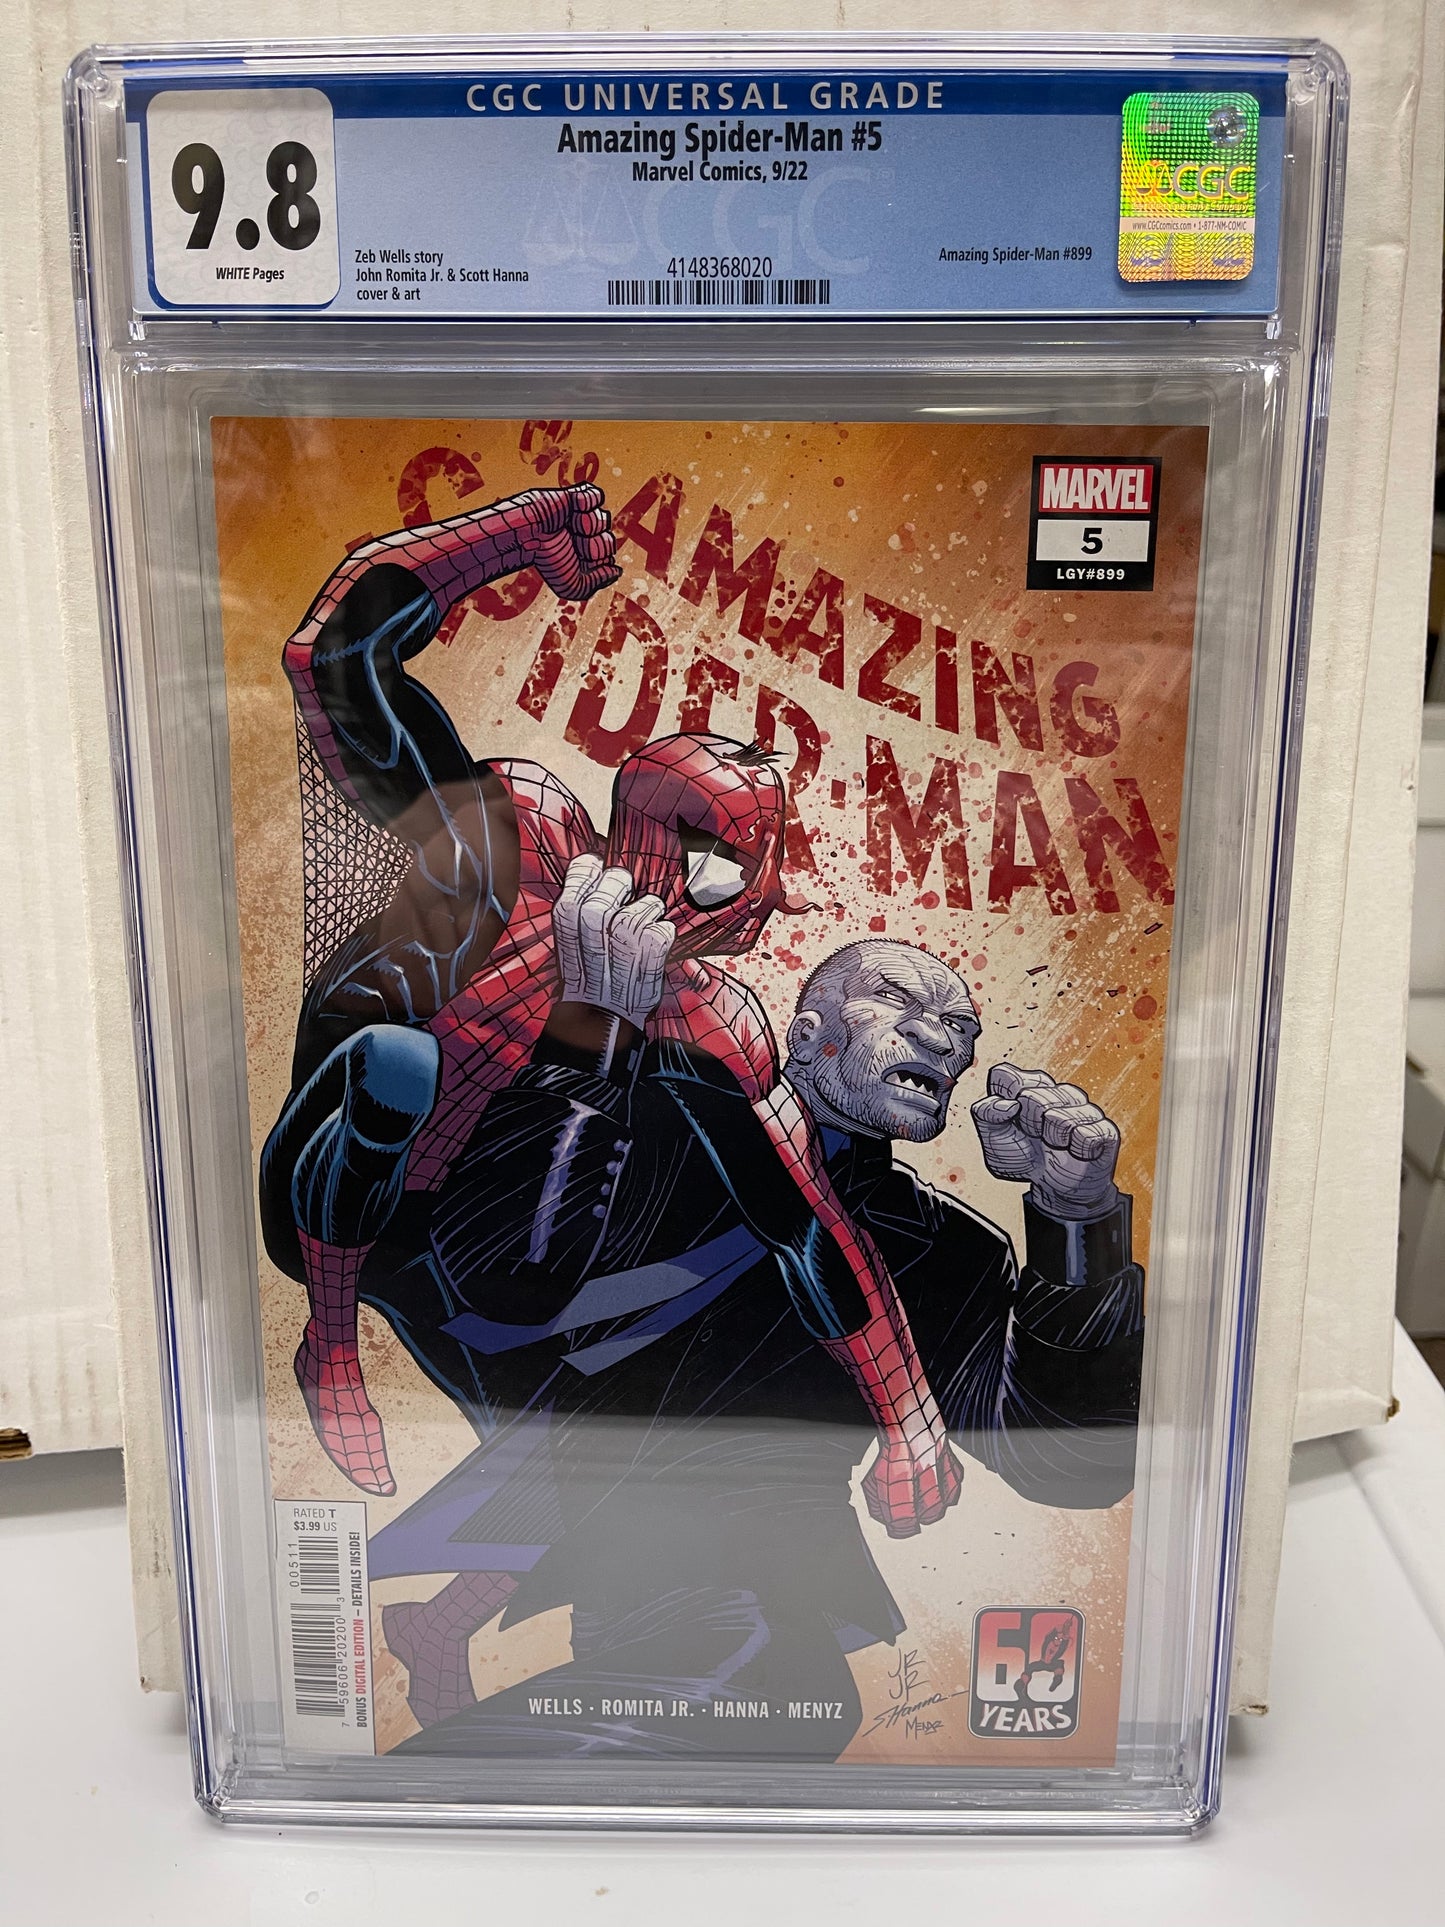 Amazing Spider-Man #5 (Vol. 6) - CGC Graded